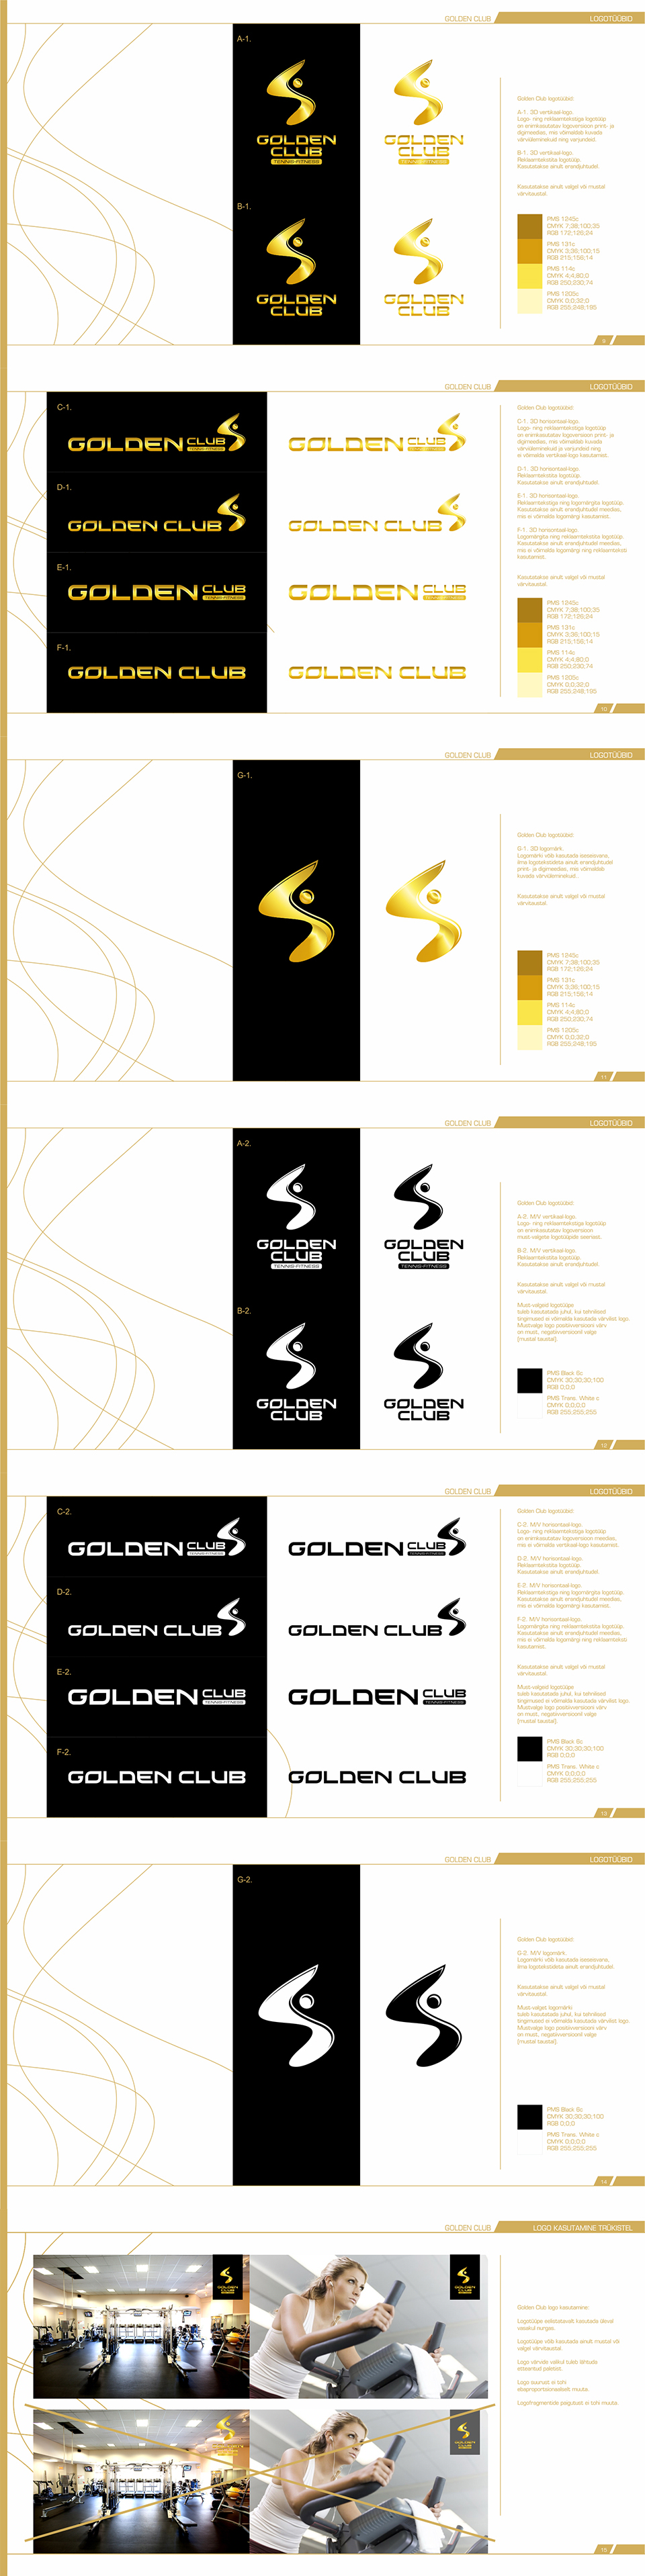 GoldenClub-2